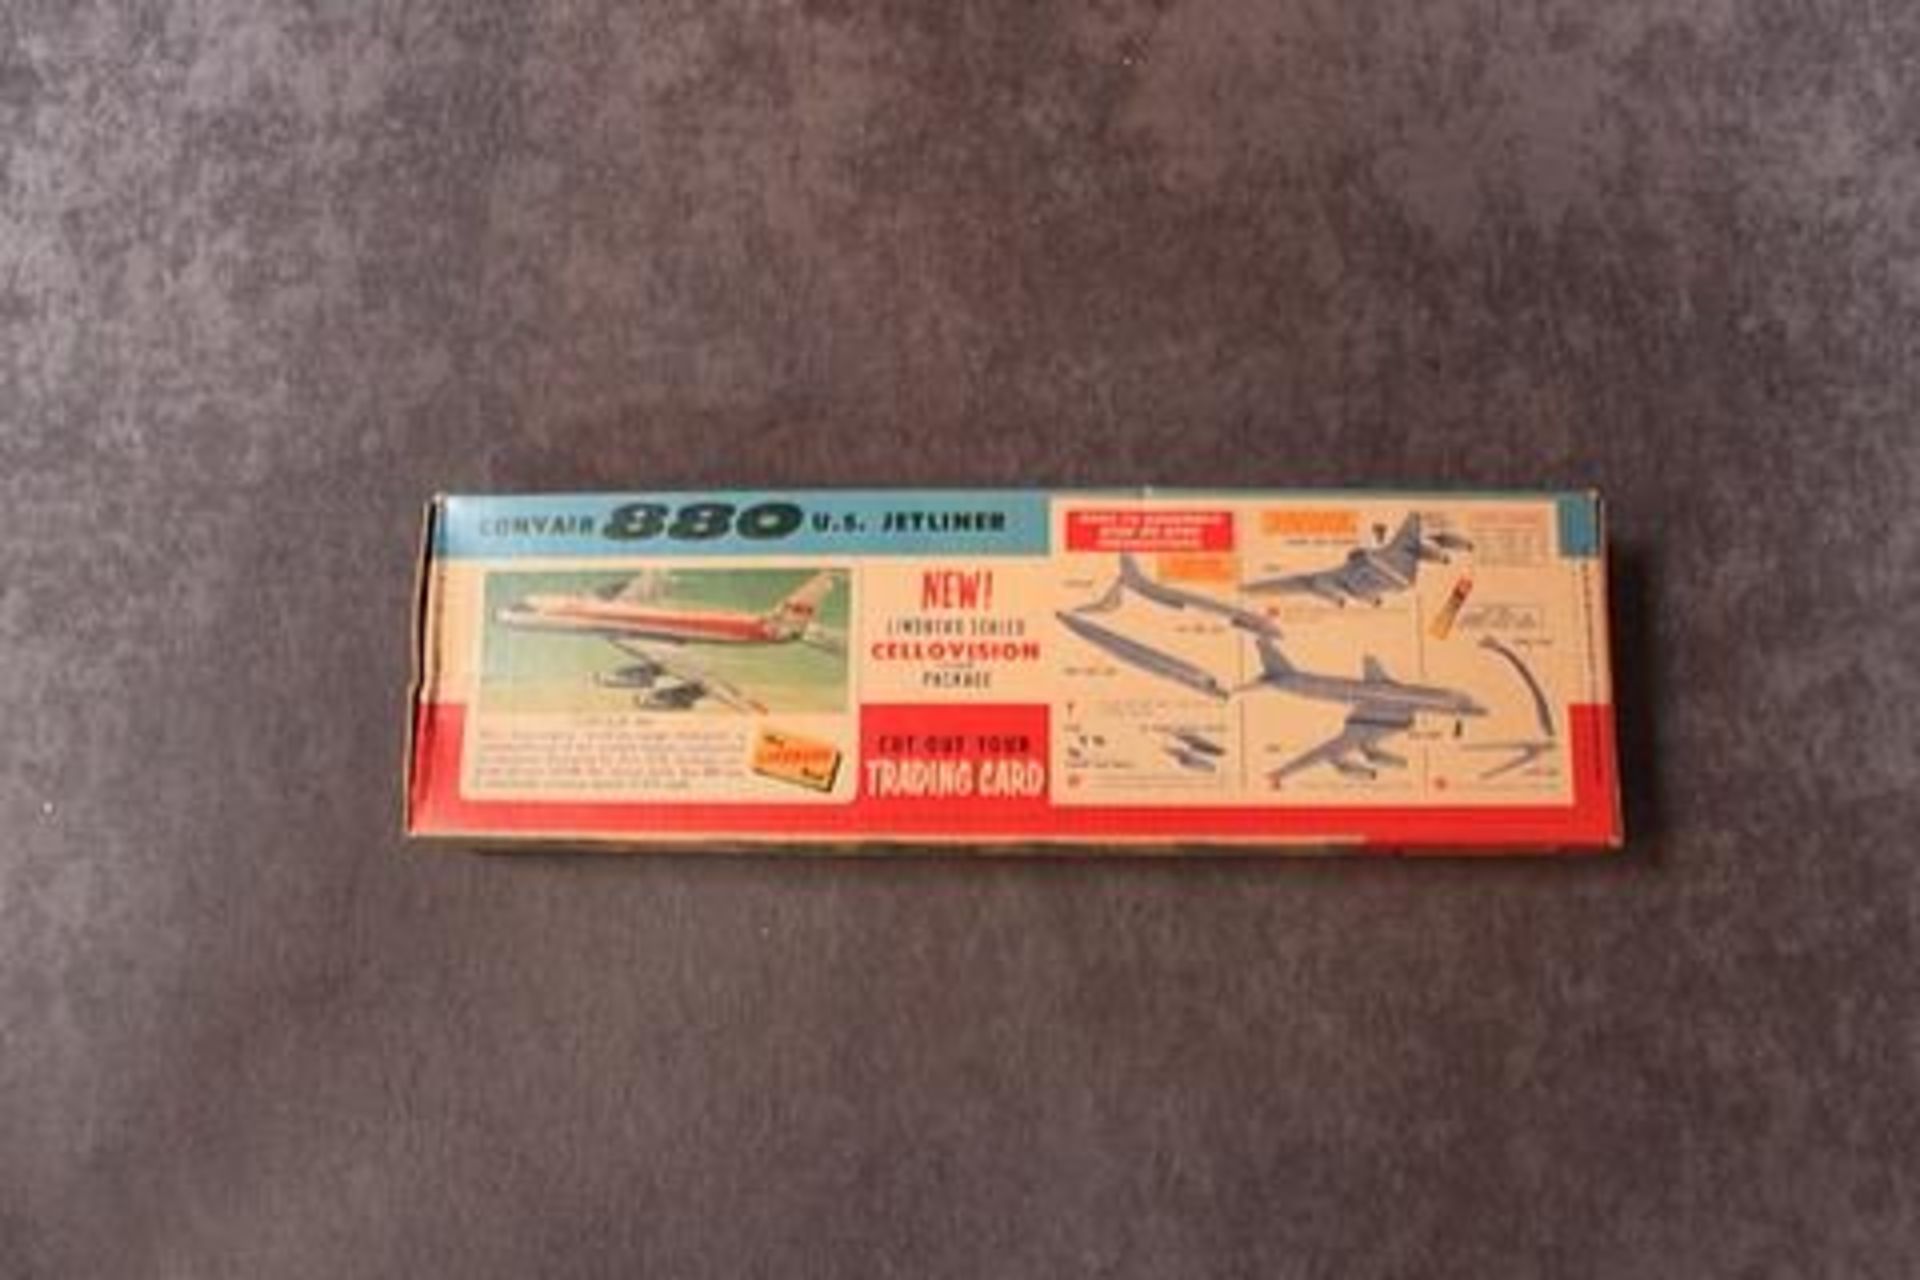 The Lindberg Kit No 452:49 Conair 880 US Jetliner In Great Unopened Box - Image 2 of 2